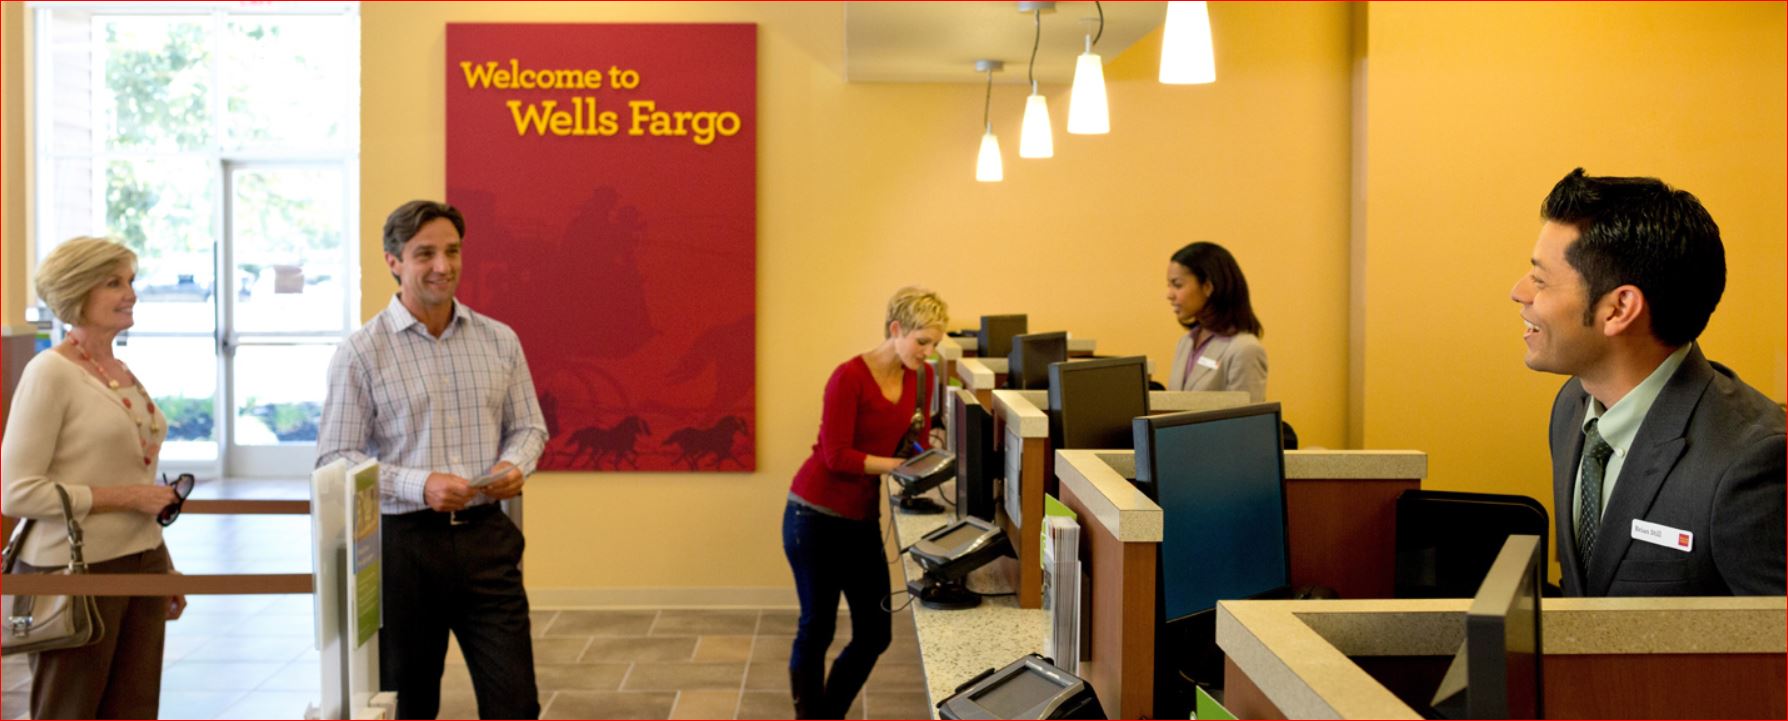 Wells Fargo Employee Benefits and Perks 2020